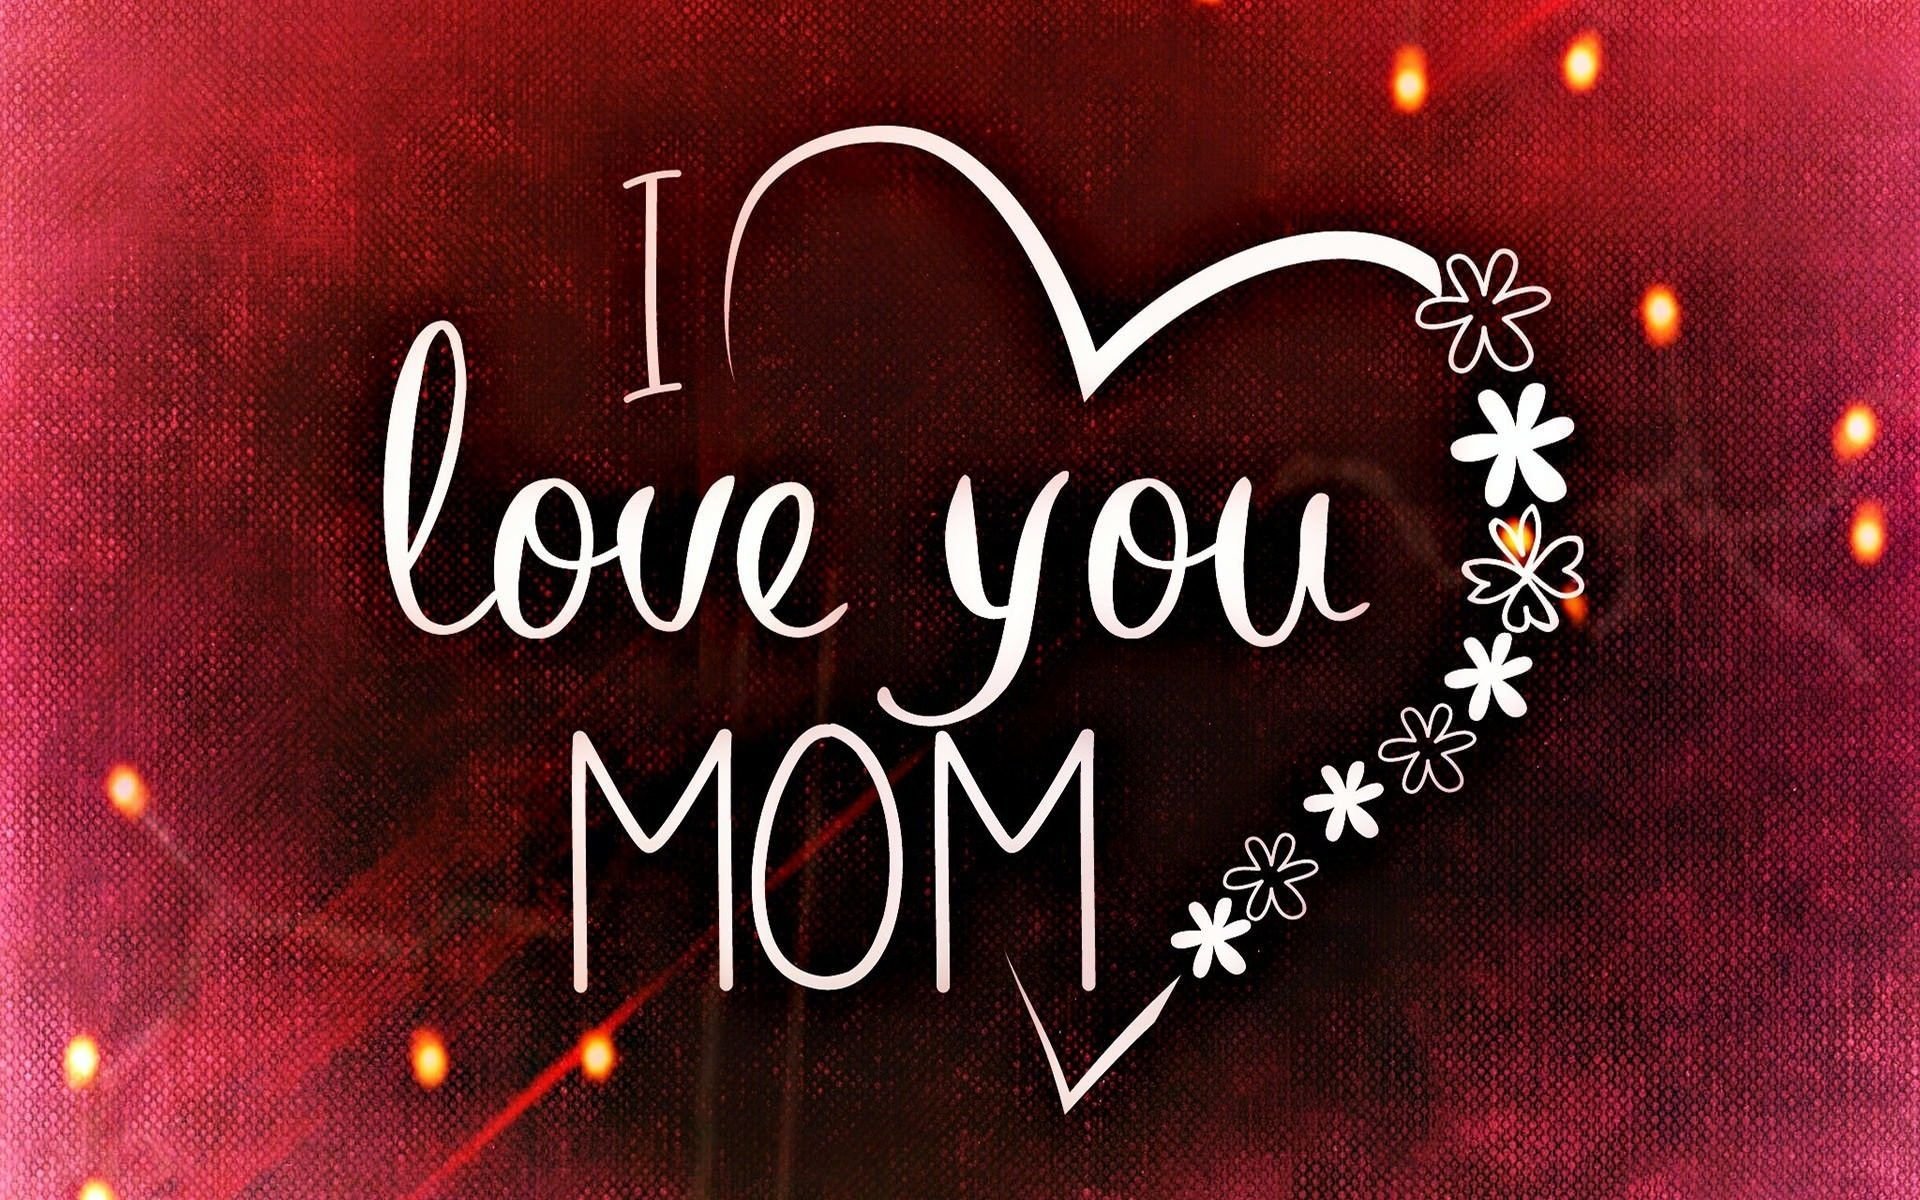 Mamy me. I Love you мама. Обои с надписью i Love you. Обои с надписью люблю тебя. I Love you для мамы надпись.